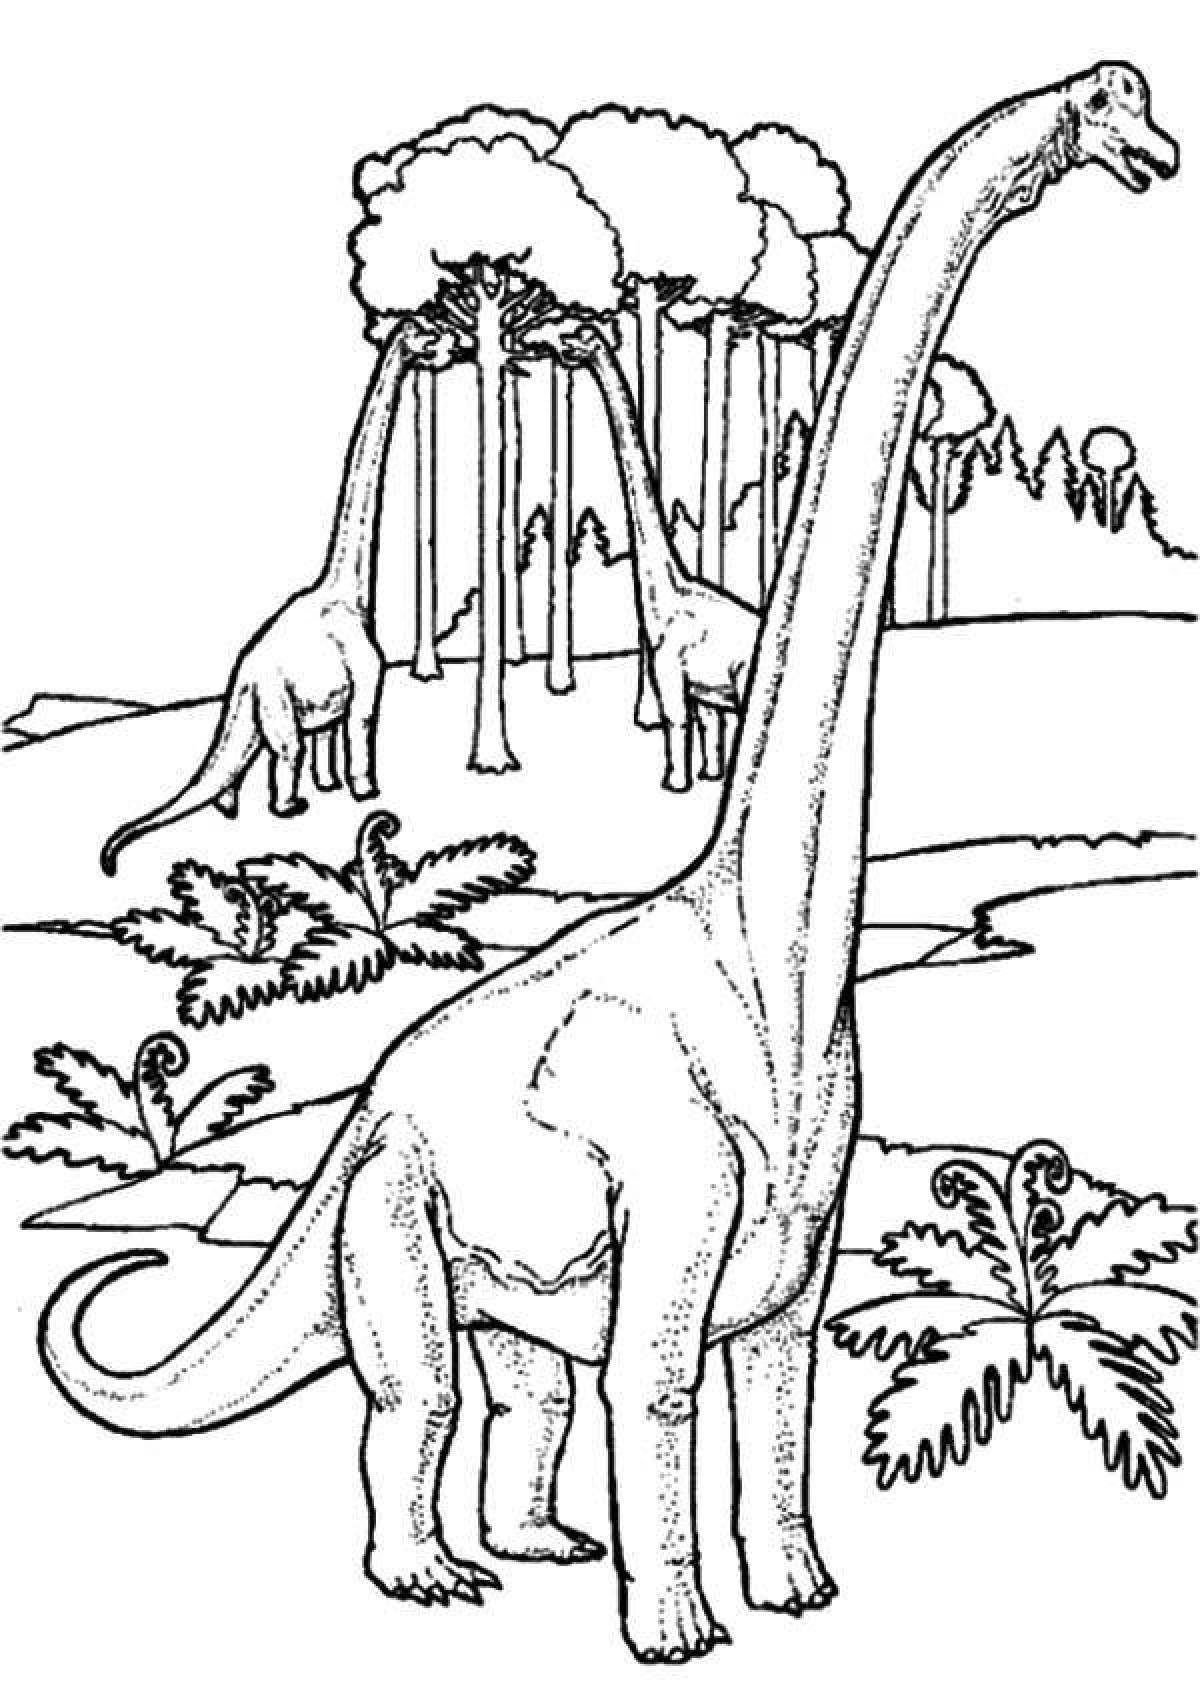 Charming brontosaurus coloring book